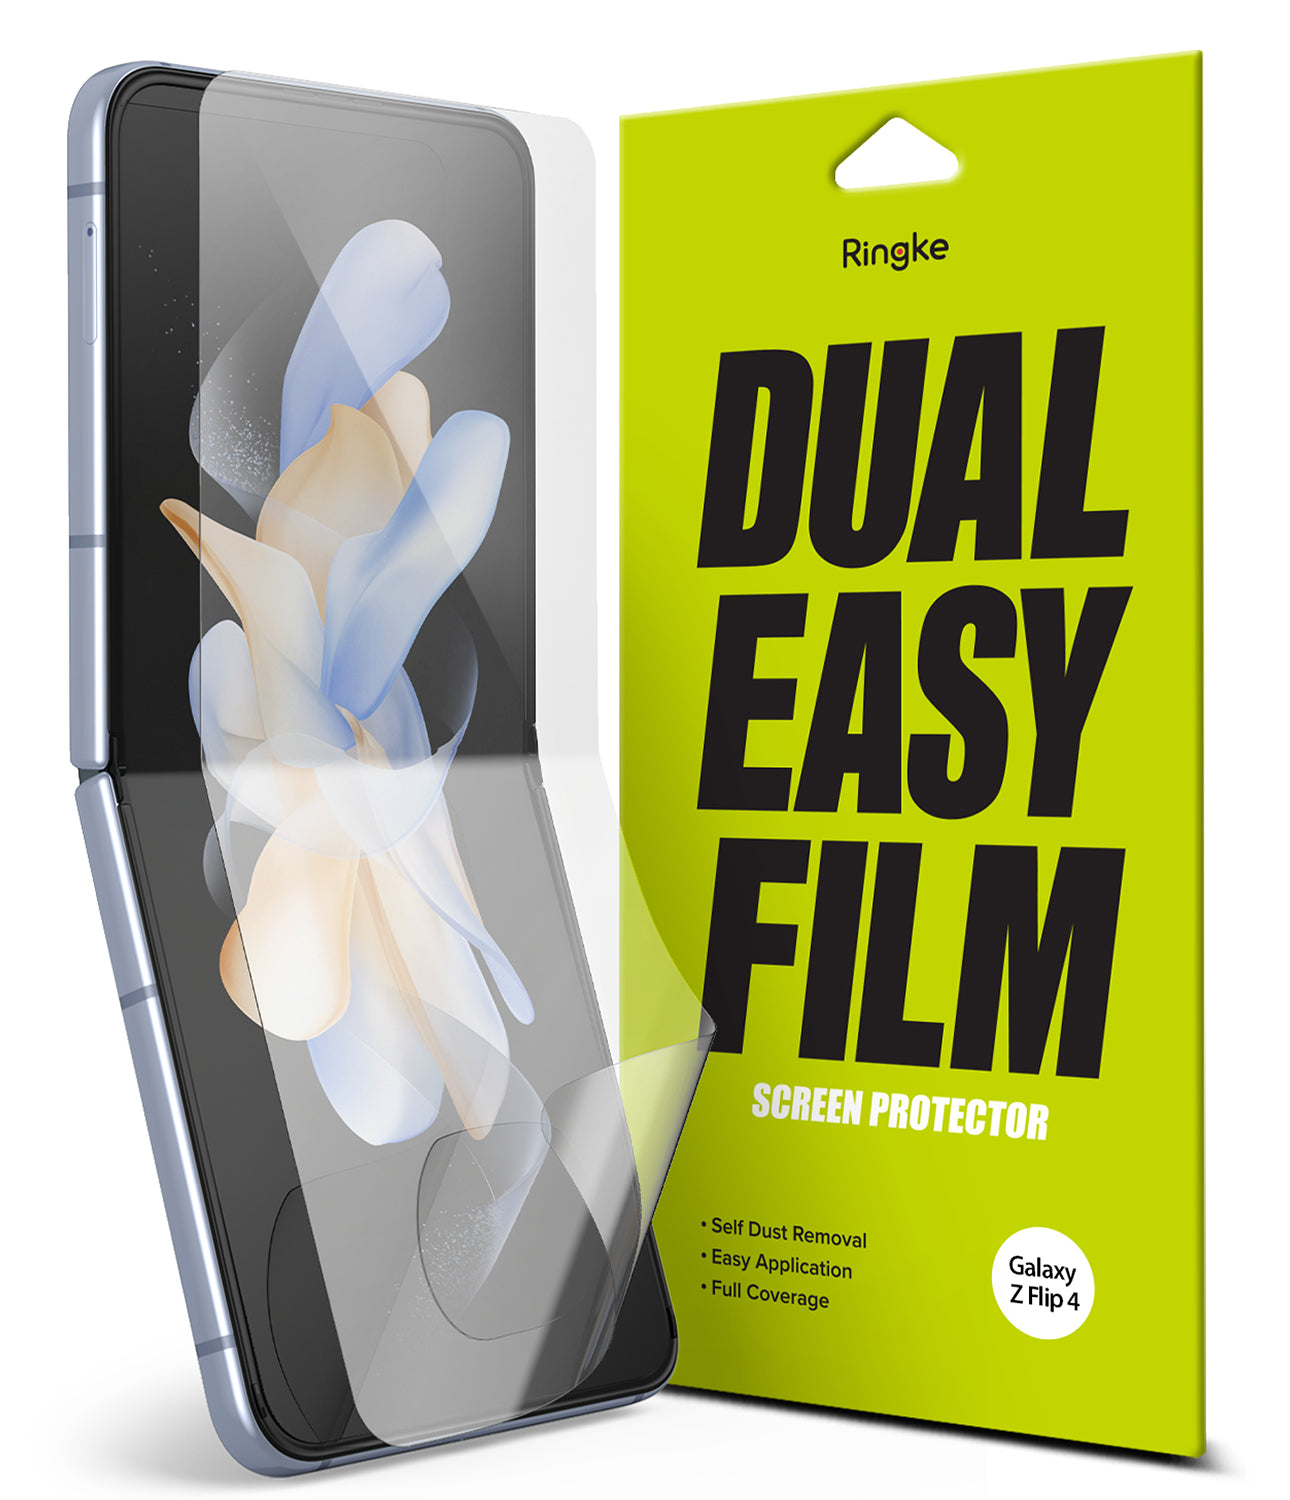 galaxy z flip 4 screen protector dual easy film main